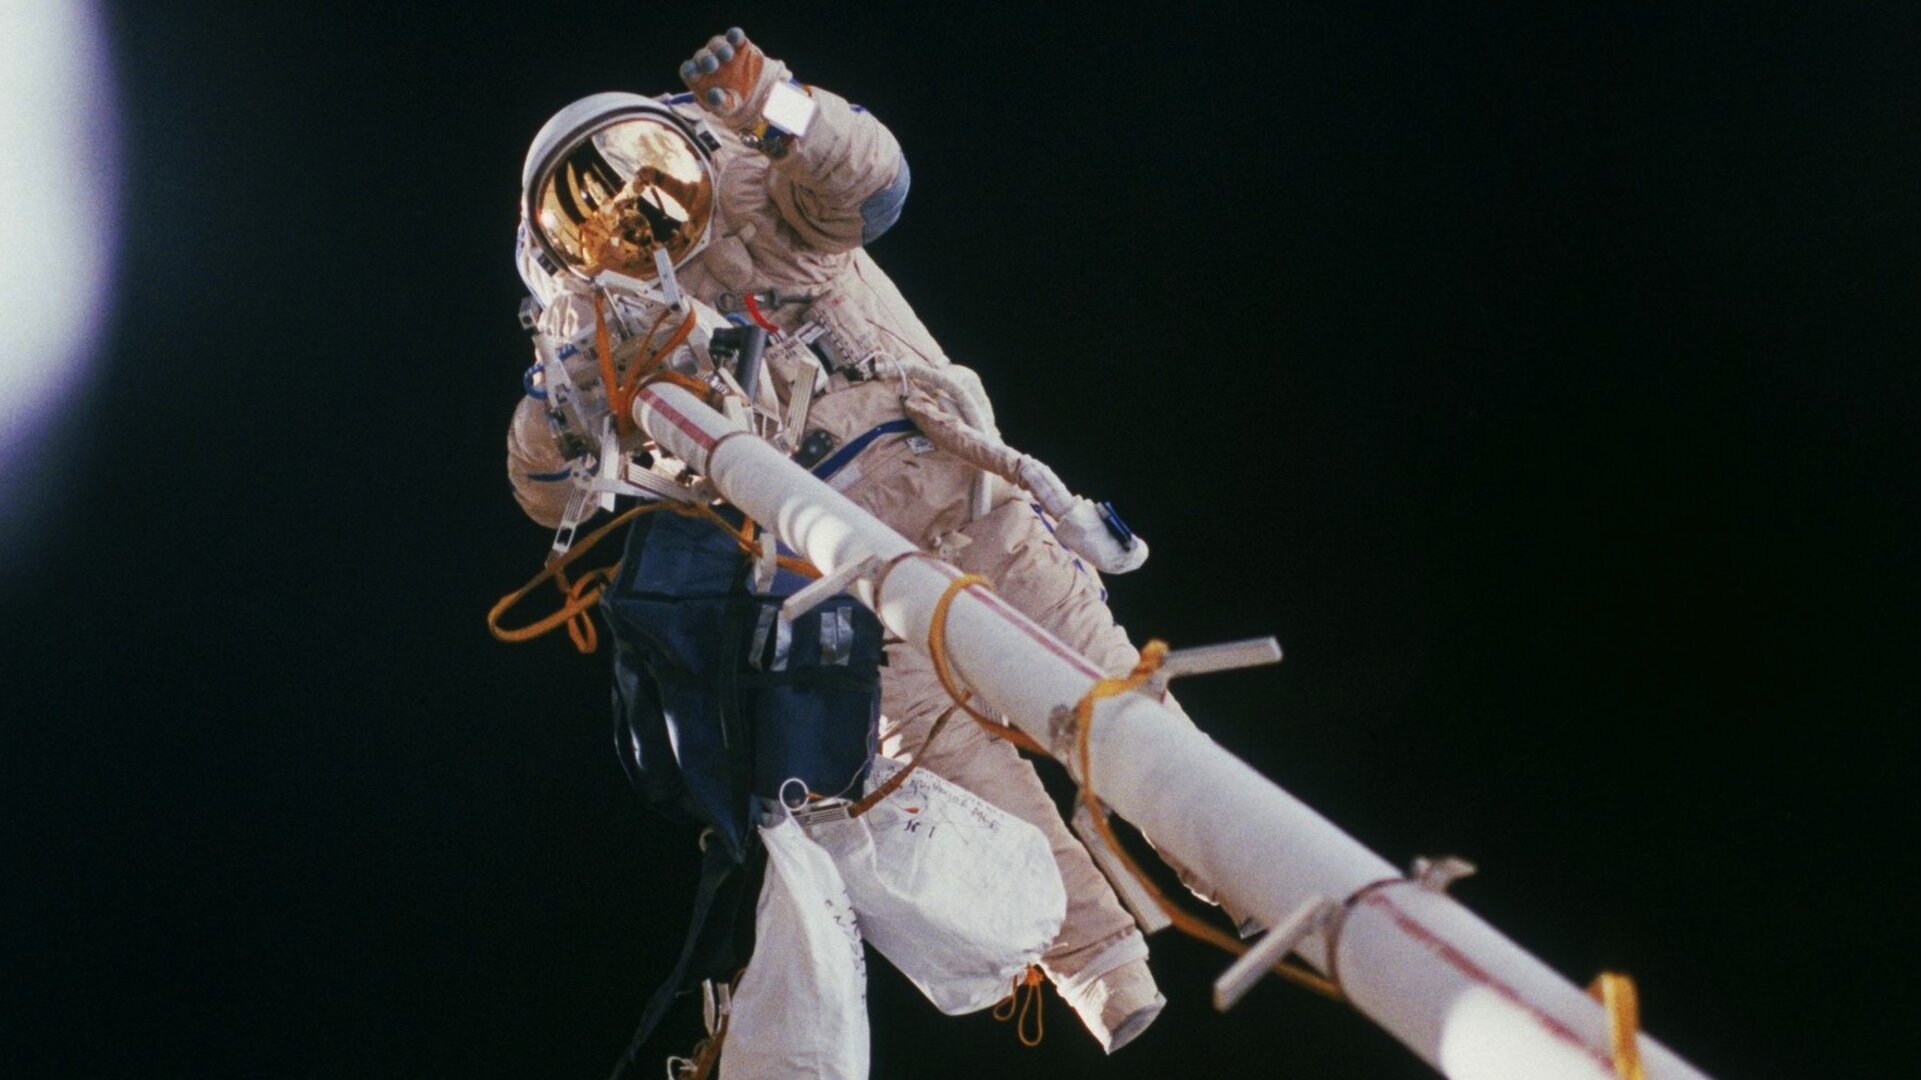 Thomas Reiter makes the first ESA spacewalk in 1995